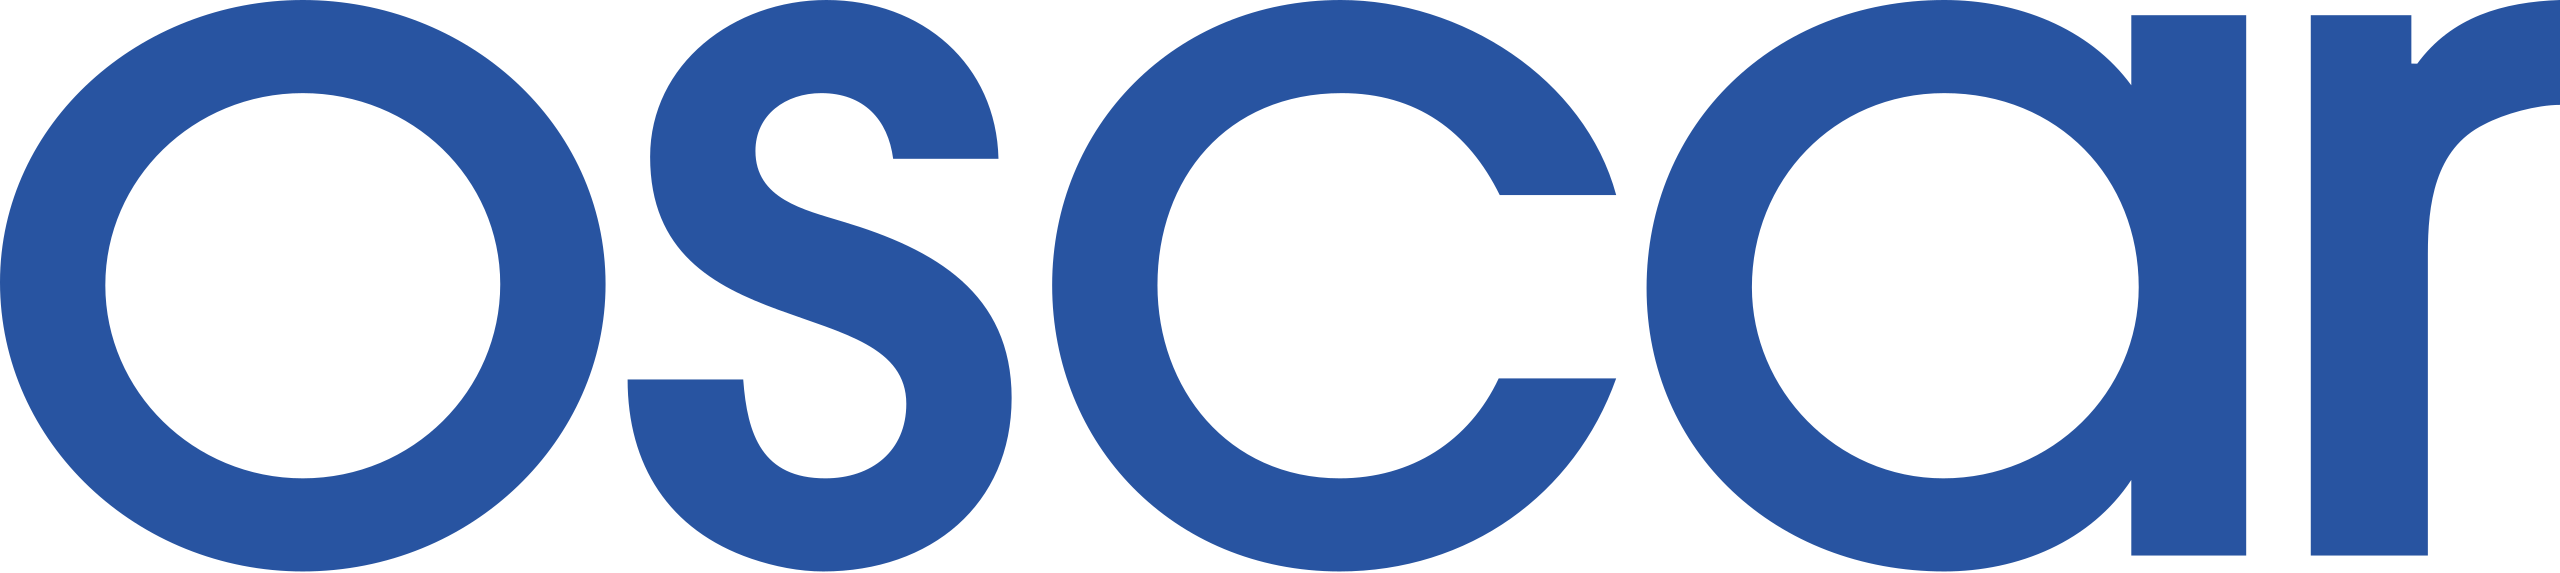 OSCAR logo